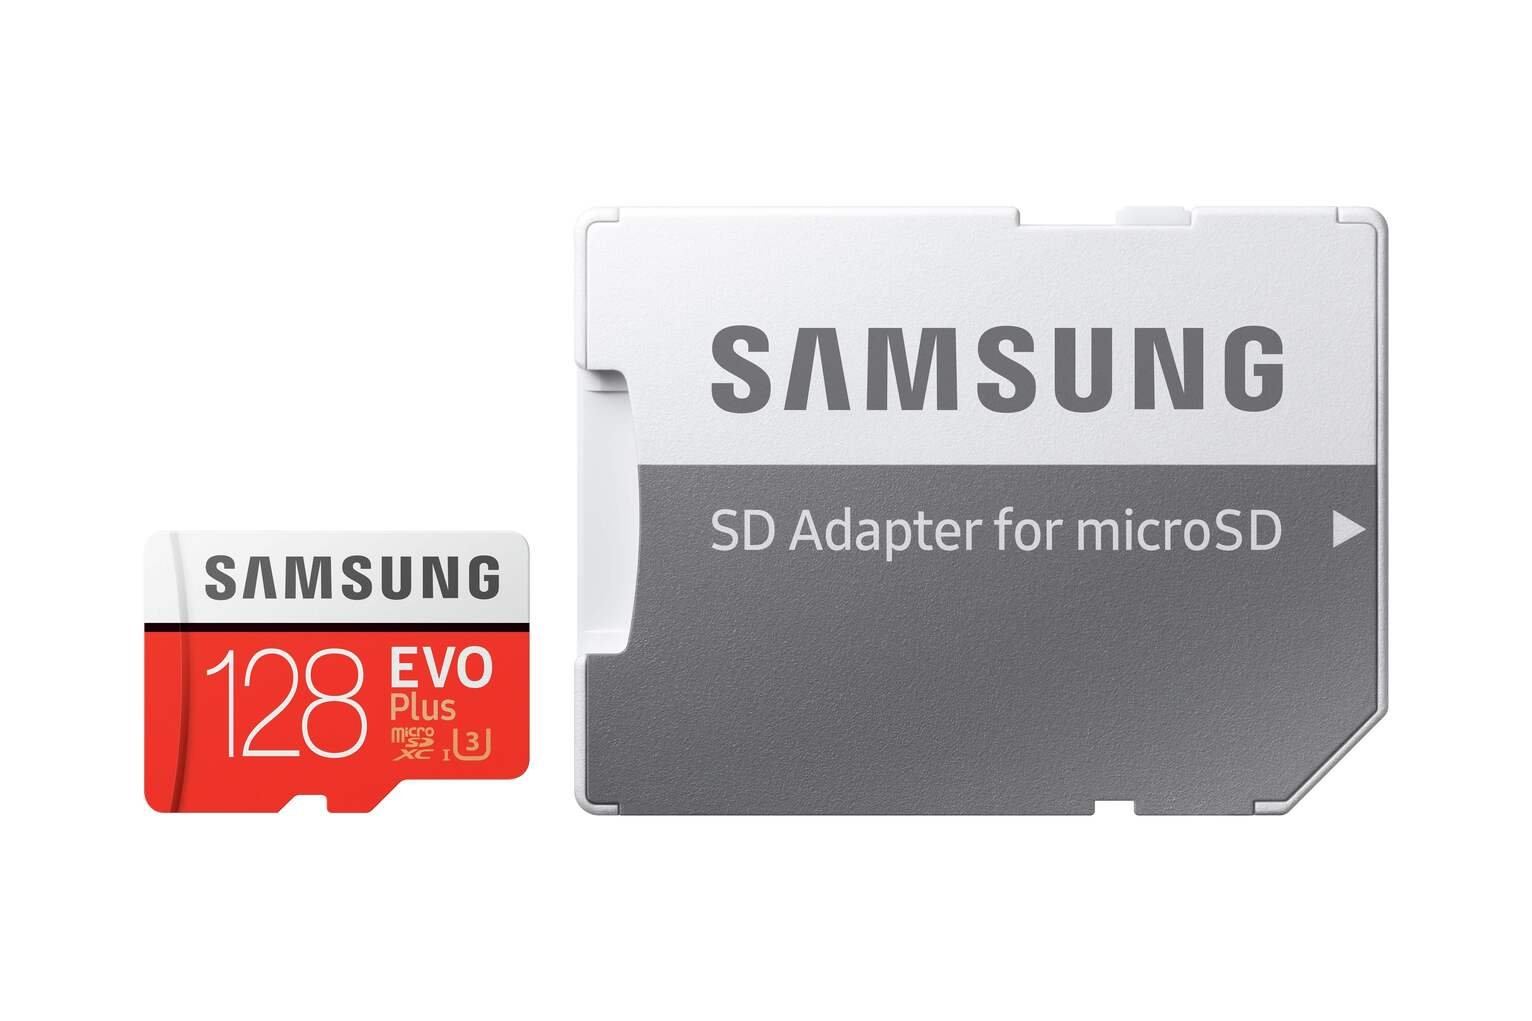 Samsung Evo Plus 100MBs MicroSD Memory Card Review